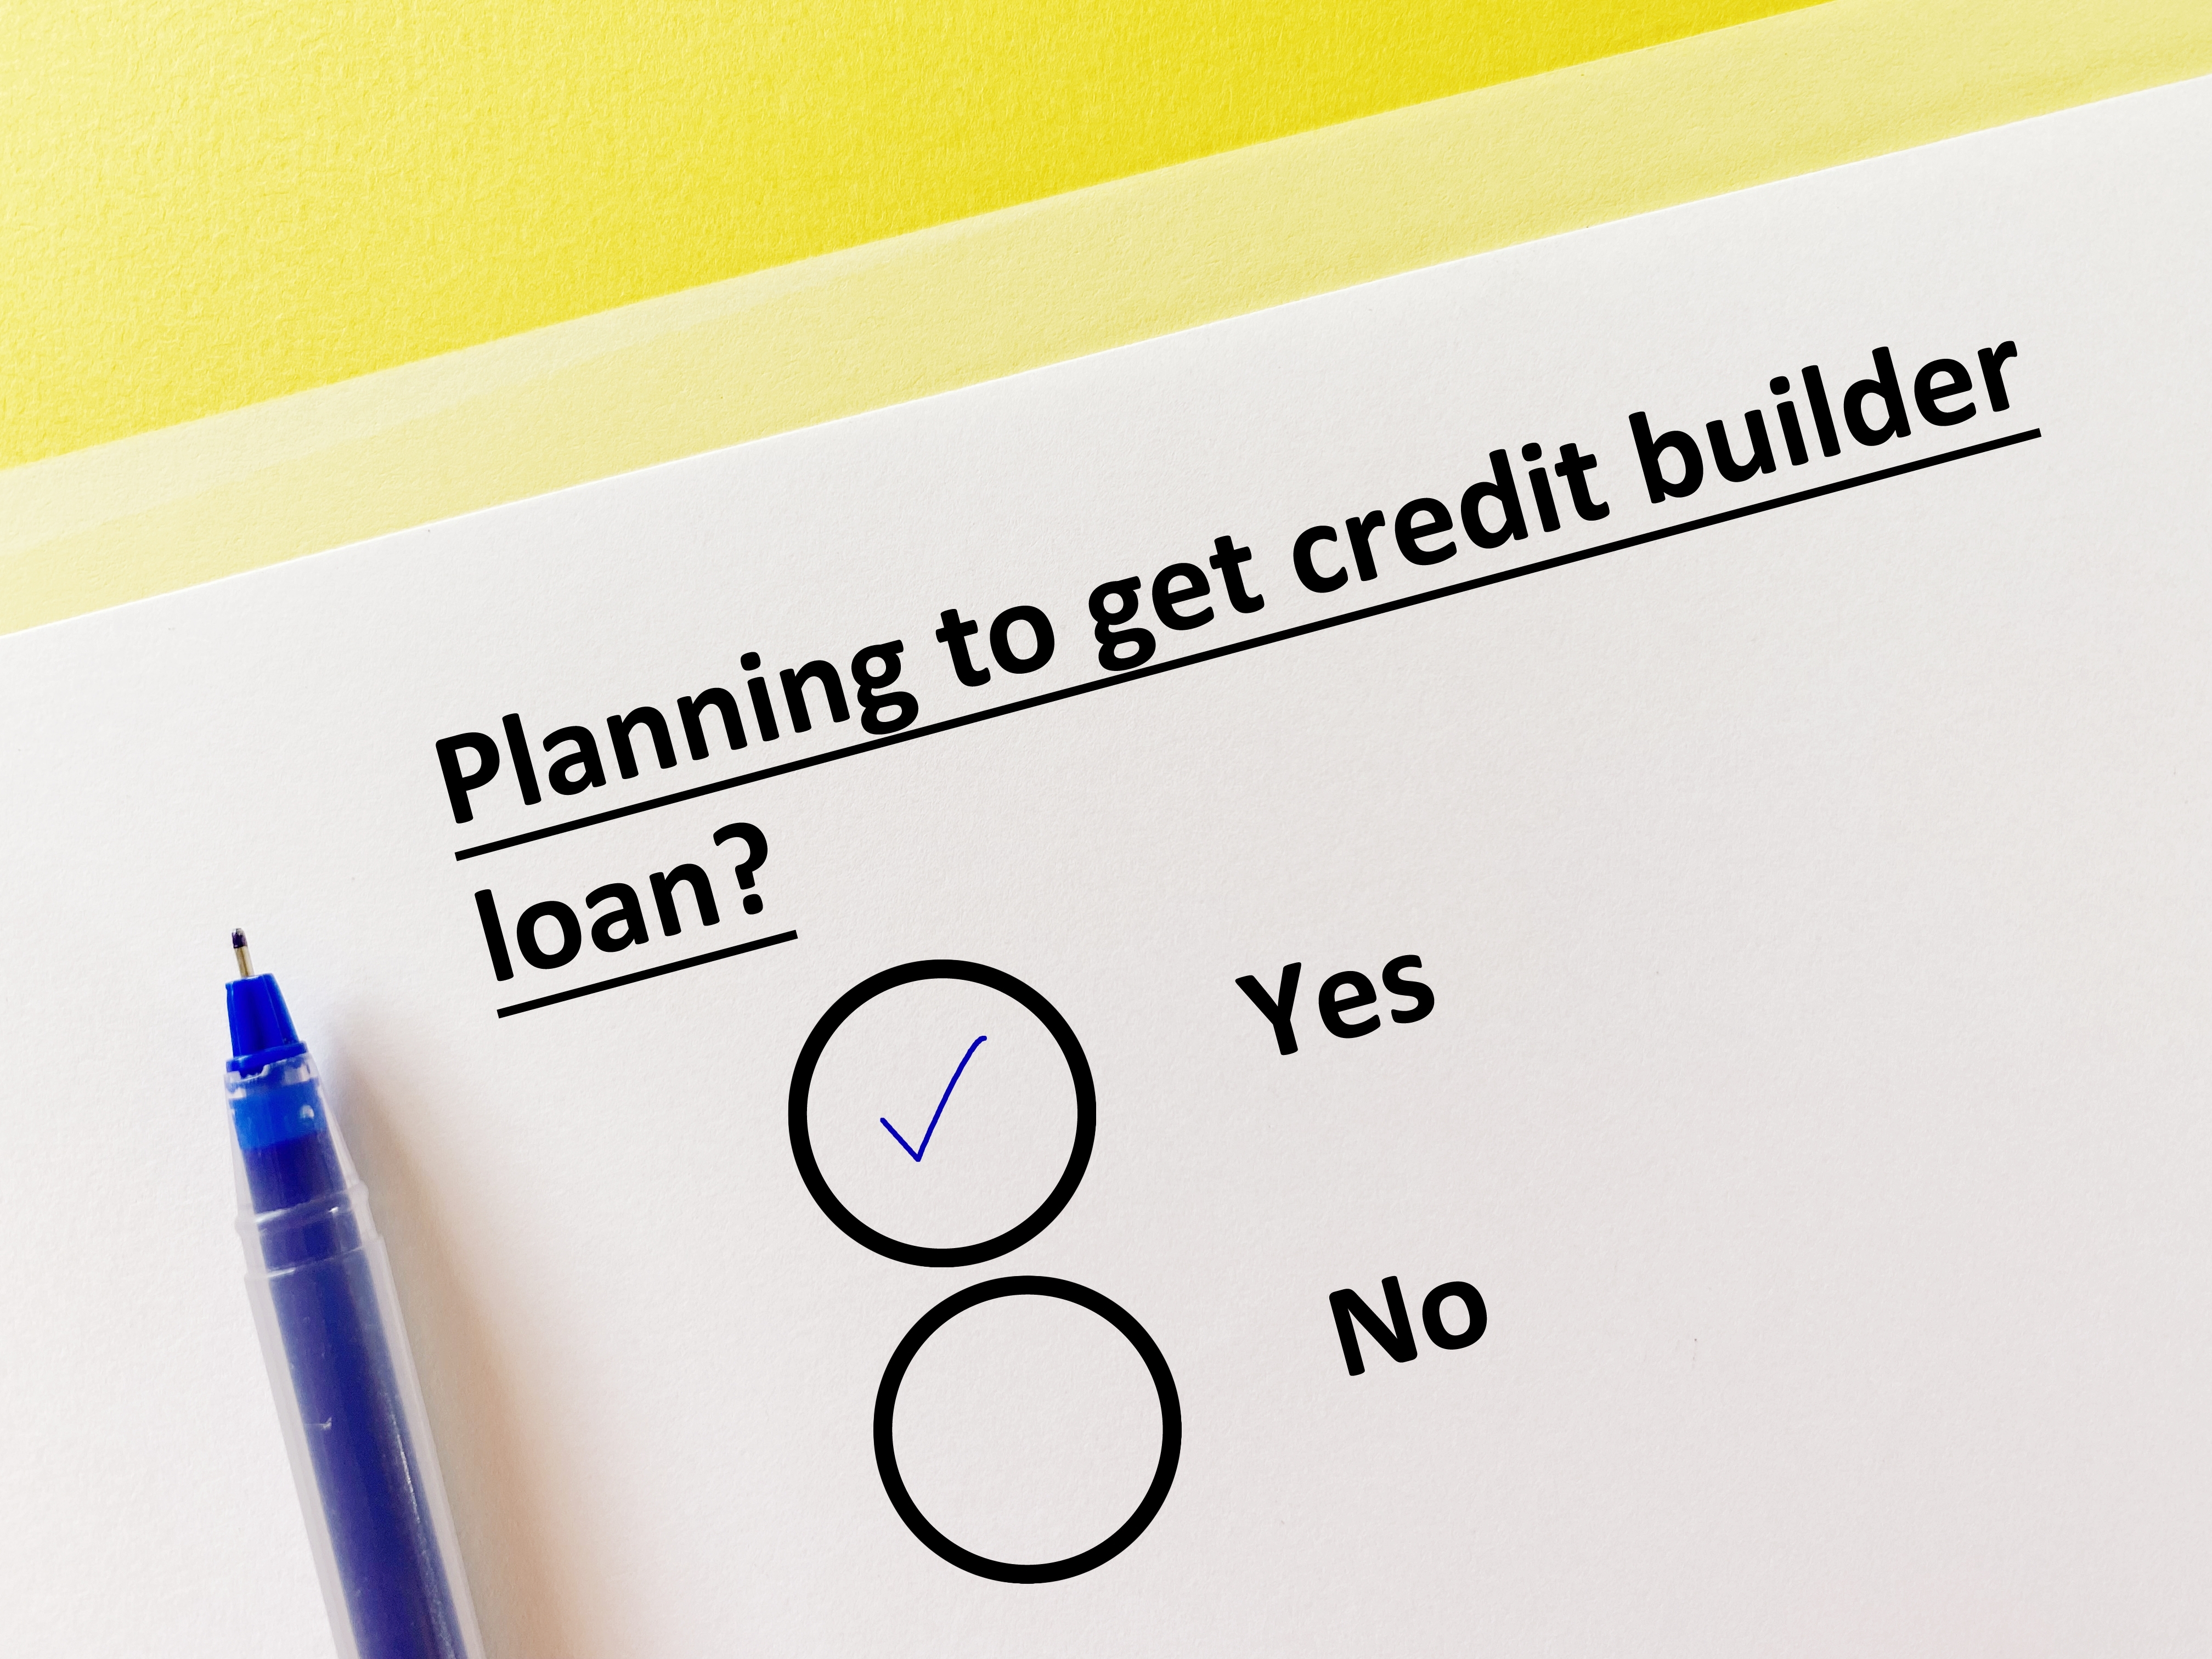 A Bridge to Better Credit: Credit Builder Loans